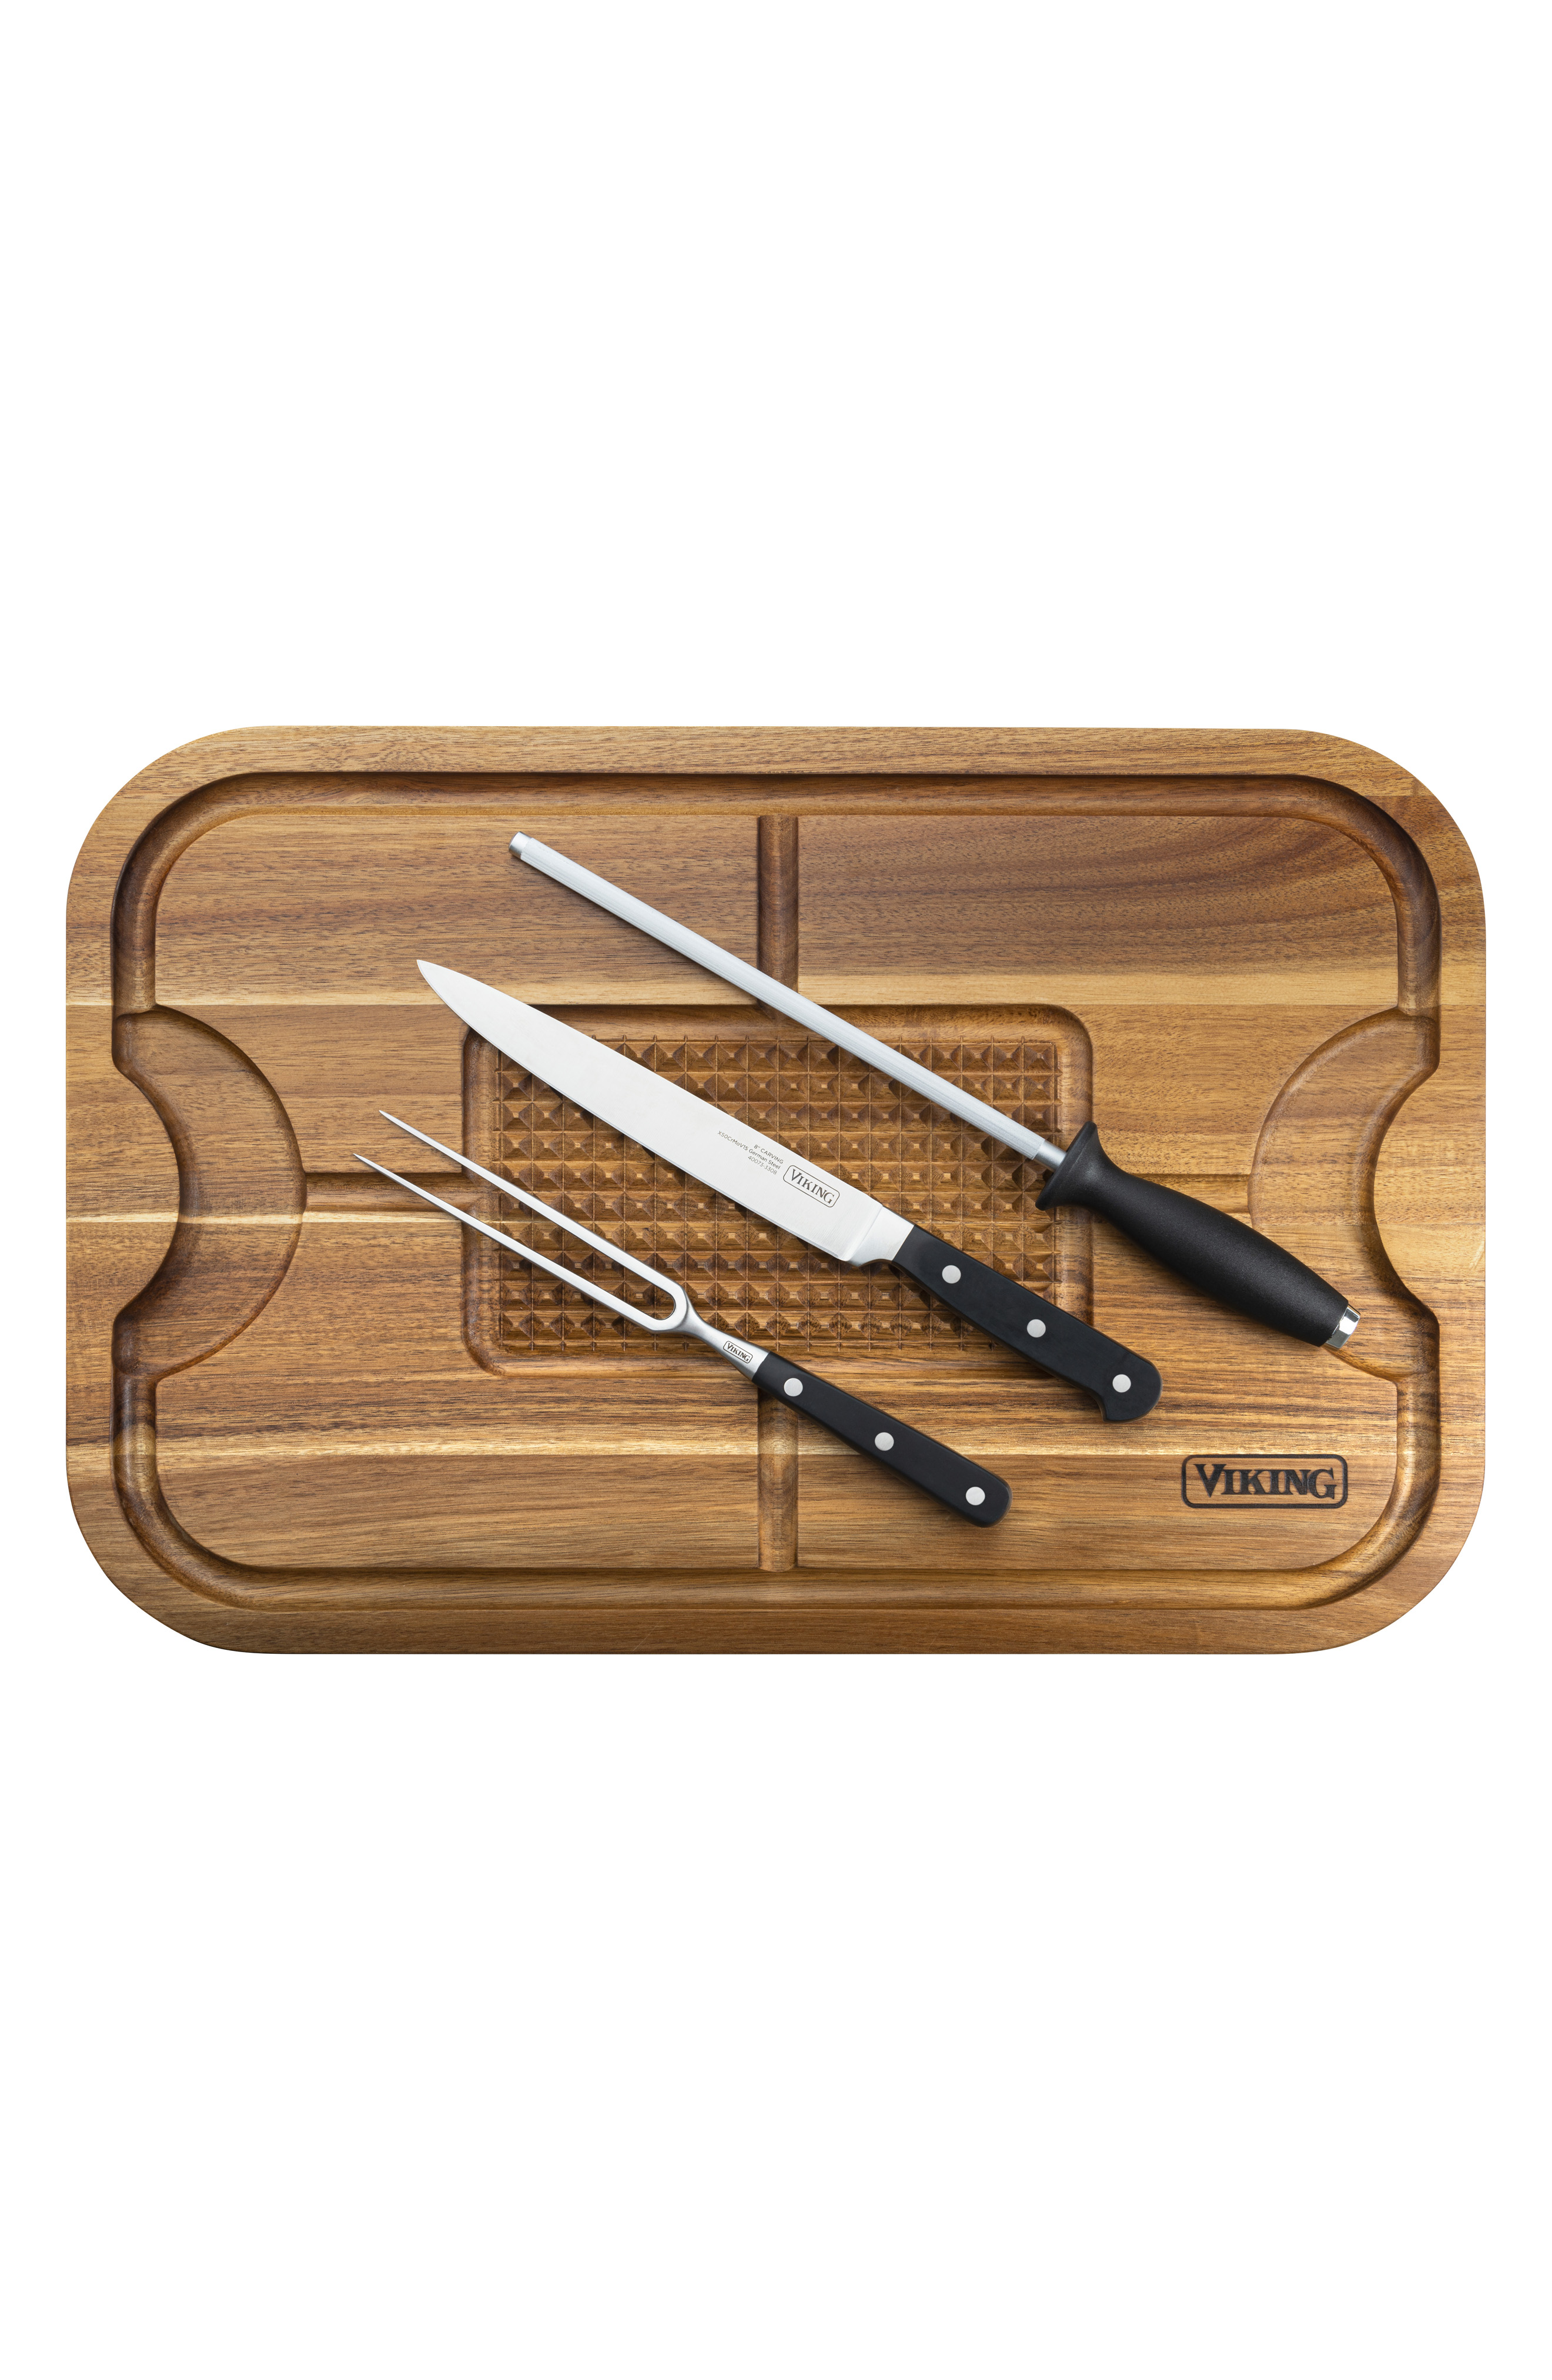 Viking knife set